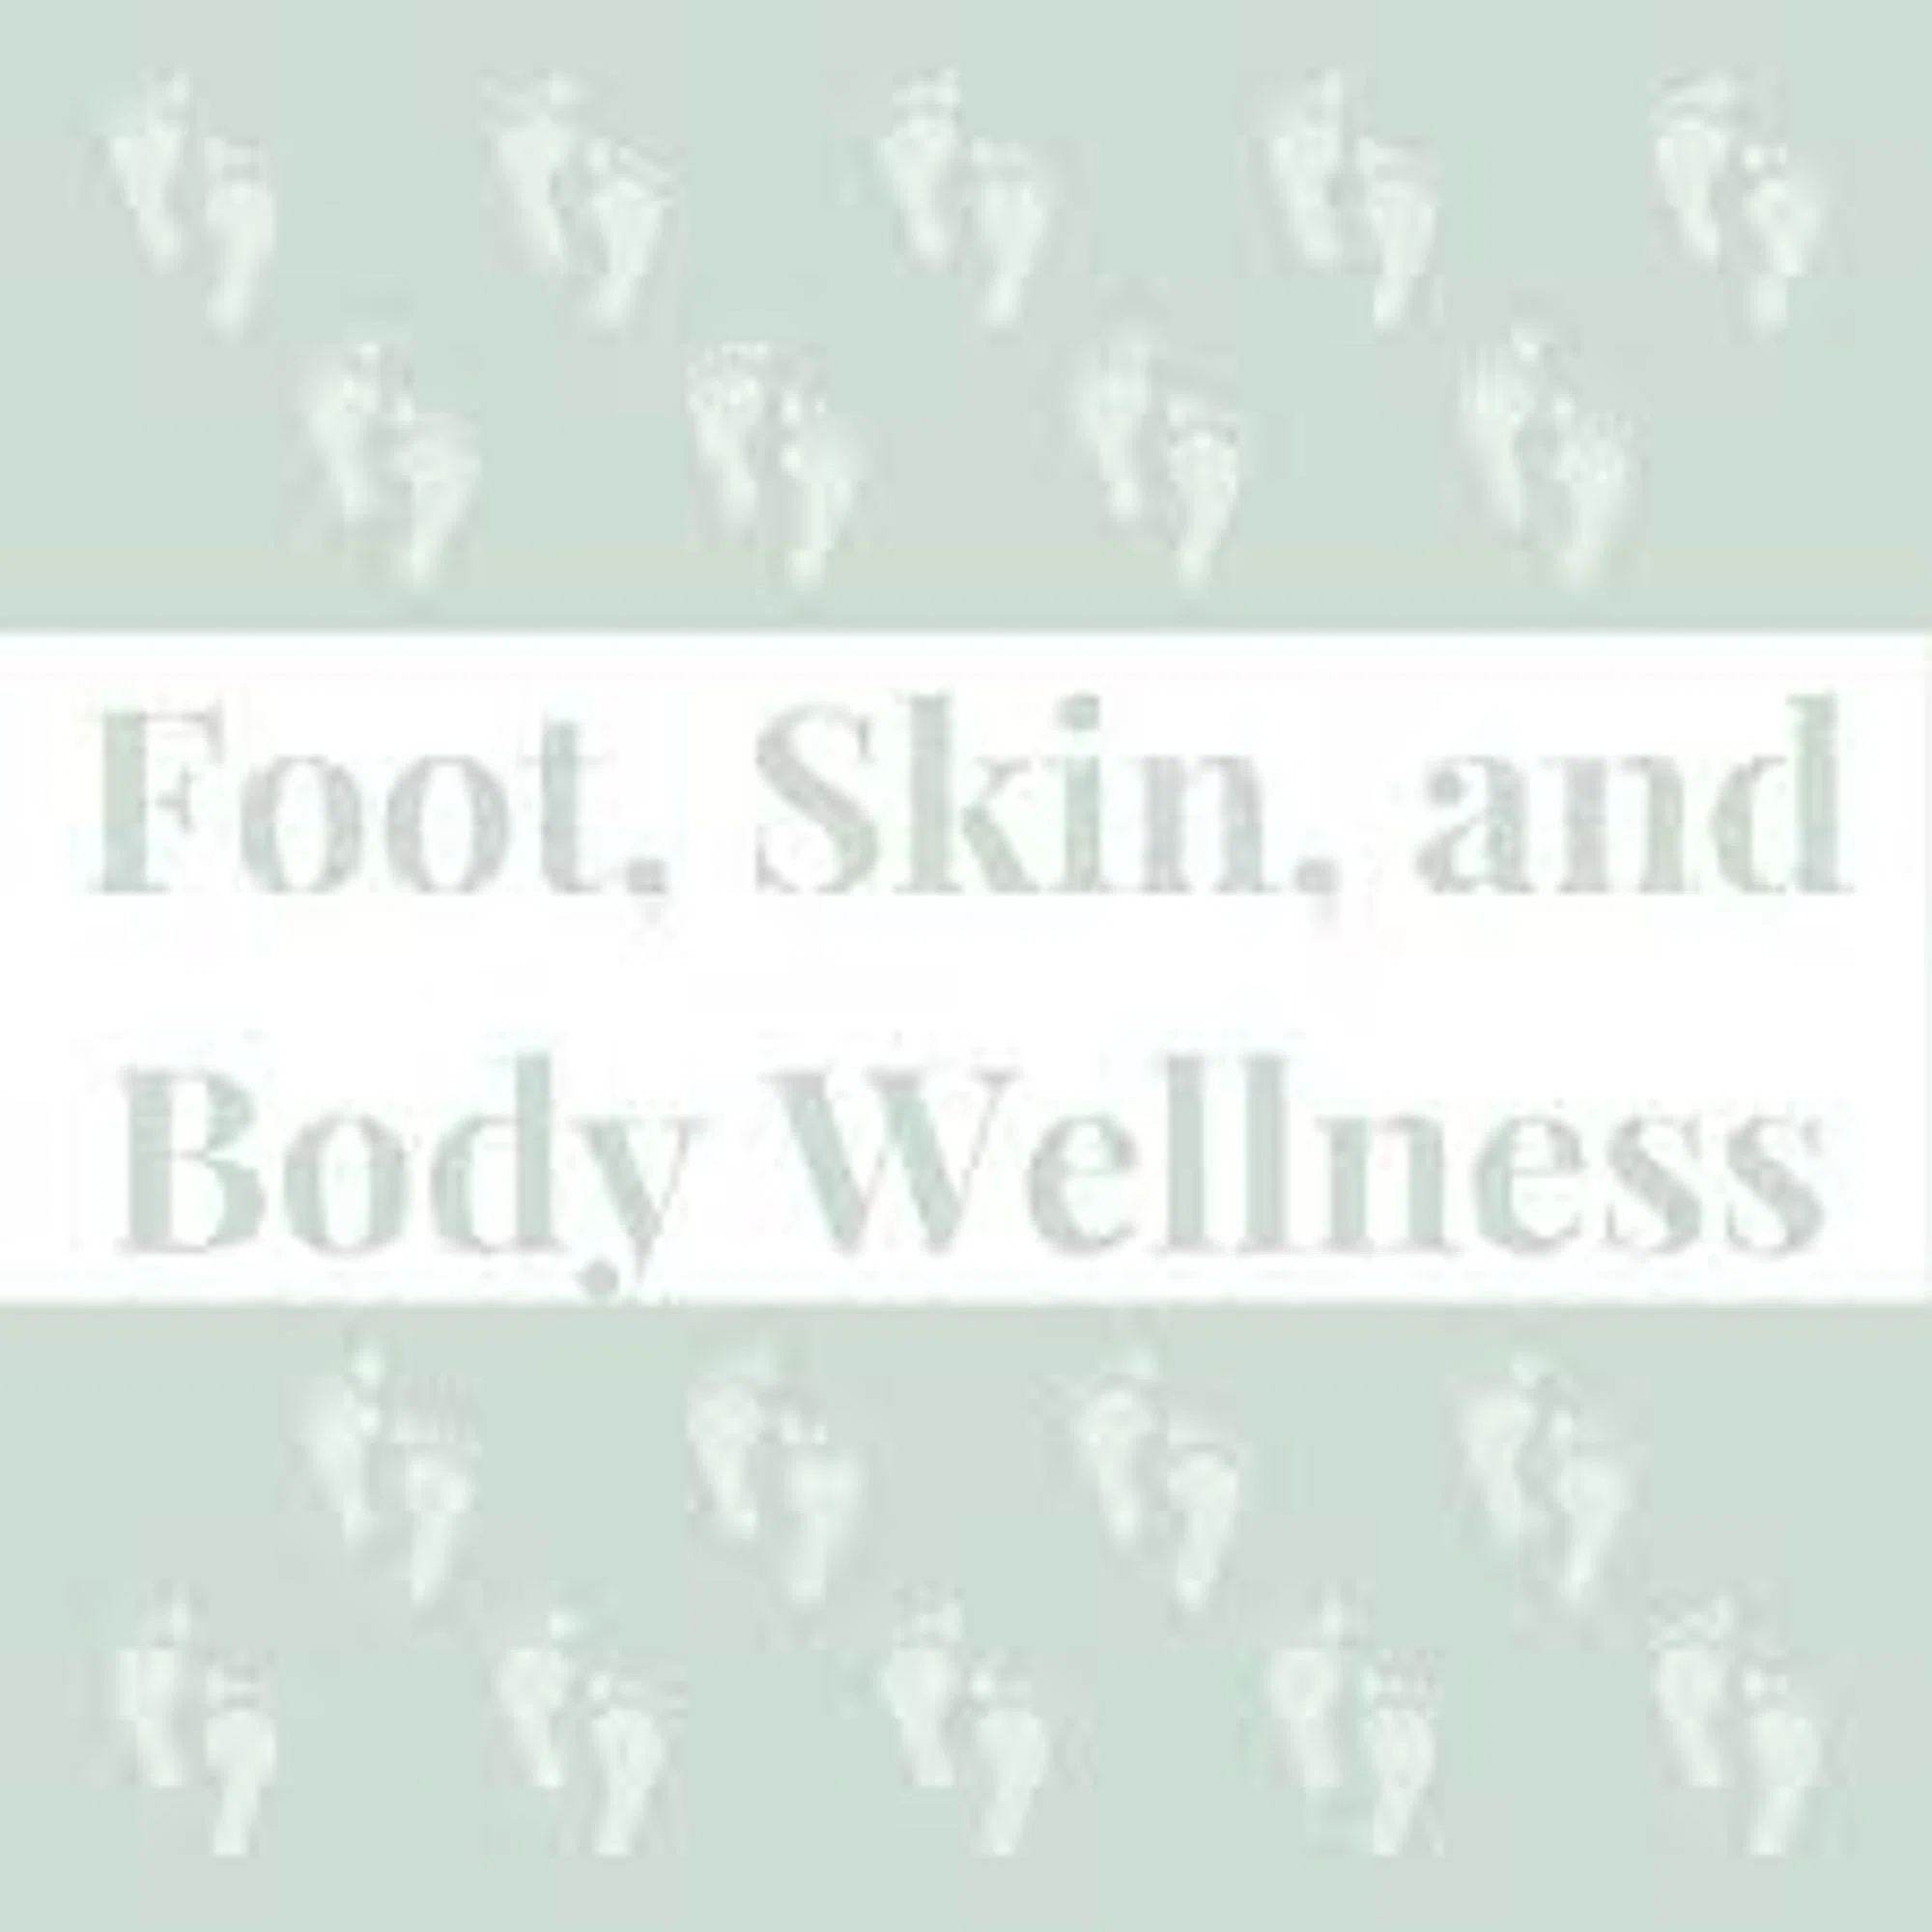 Foot, Skin, And Body Wellness